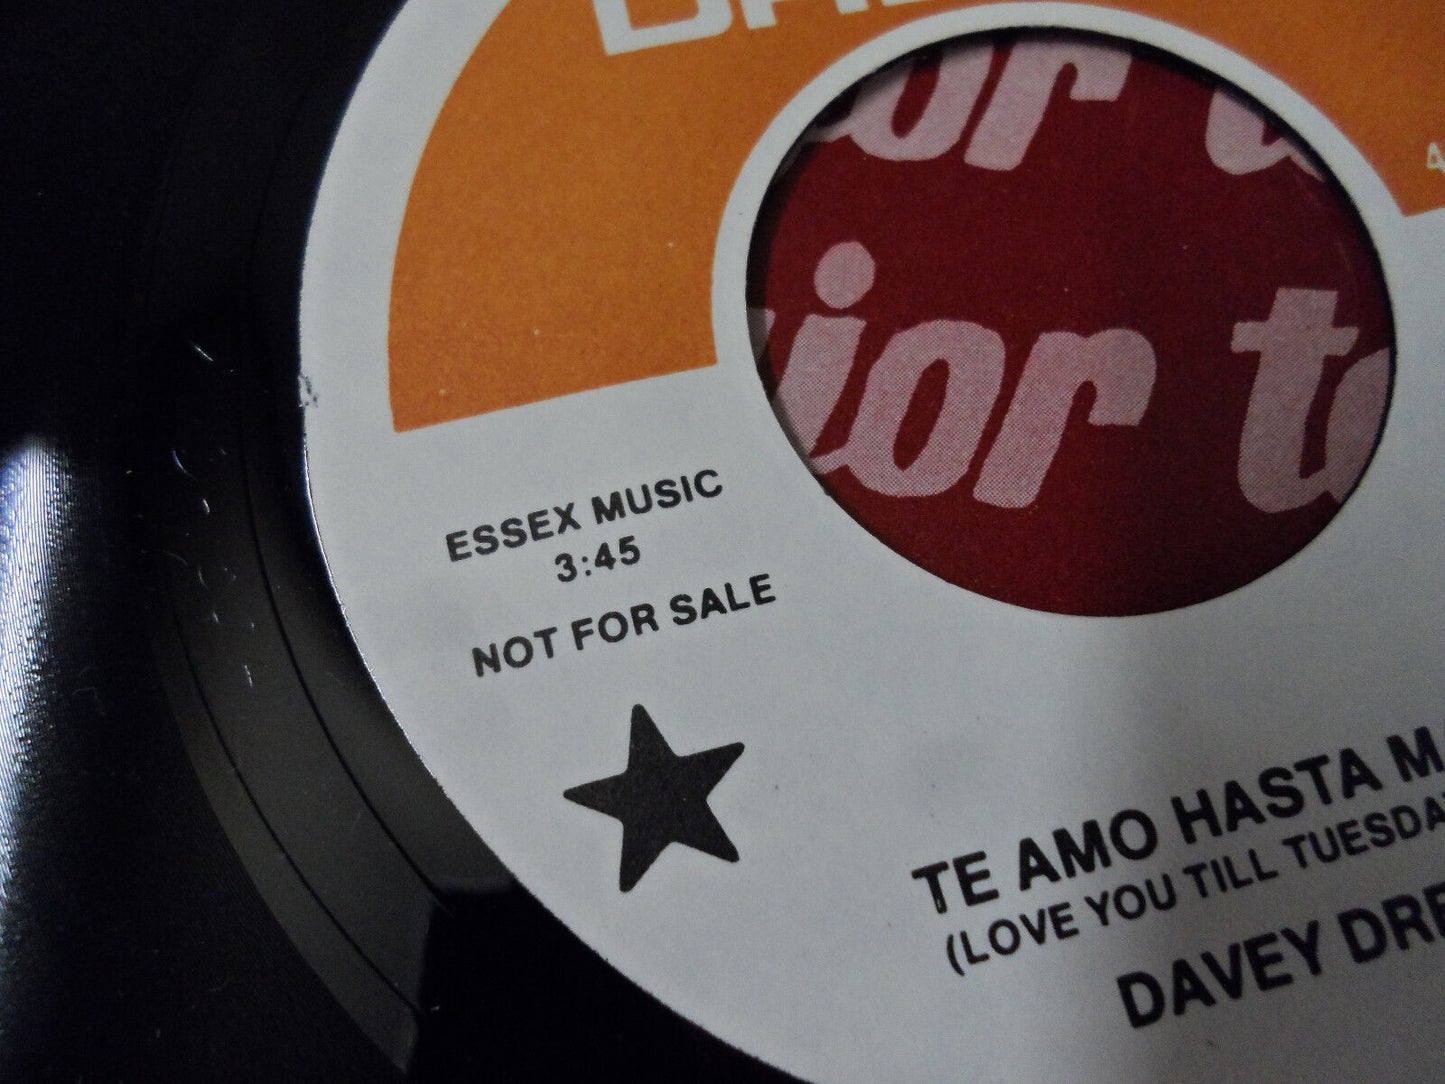 David Bowie Te Amo Hasta Martes Spain Import Promo 45